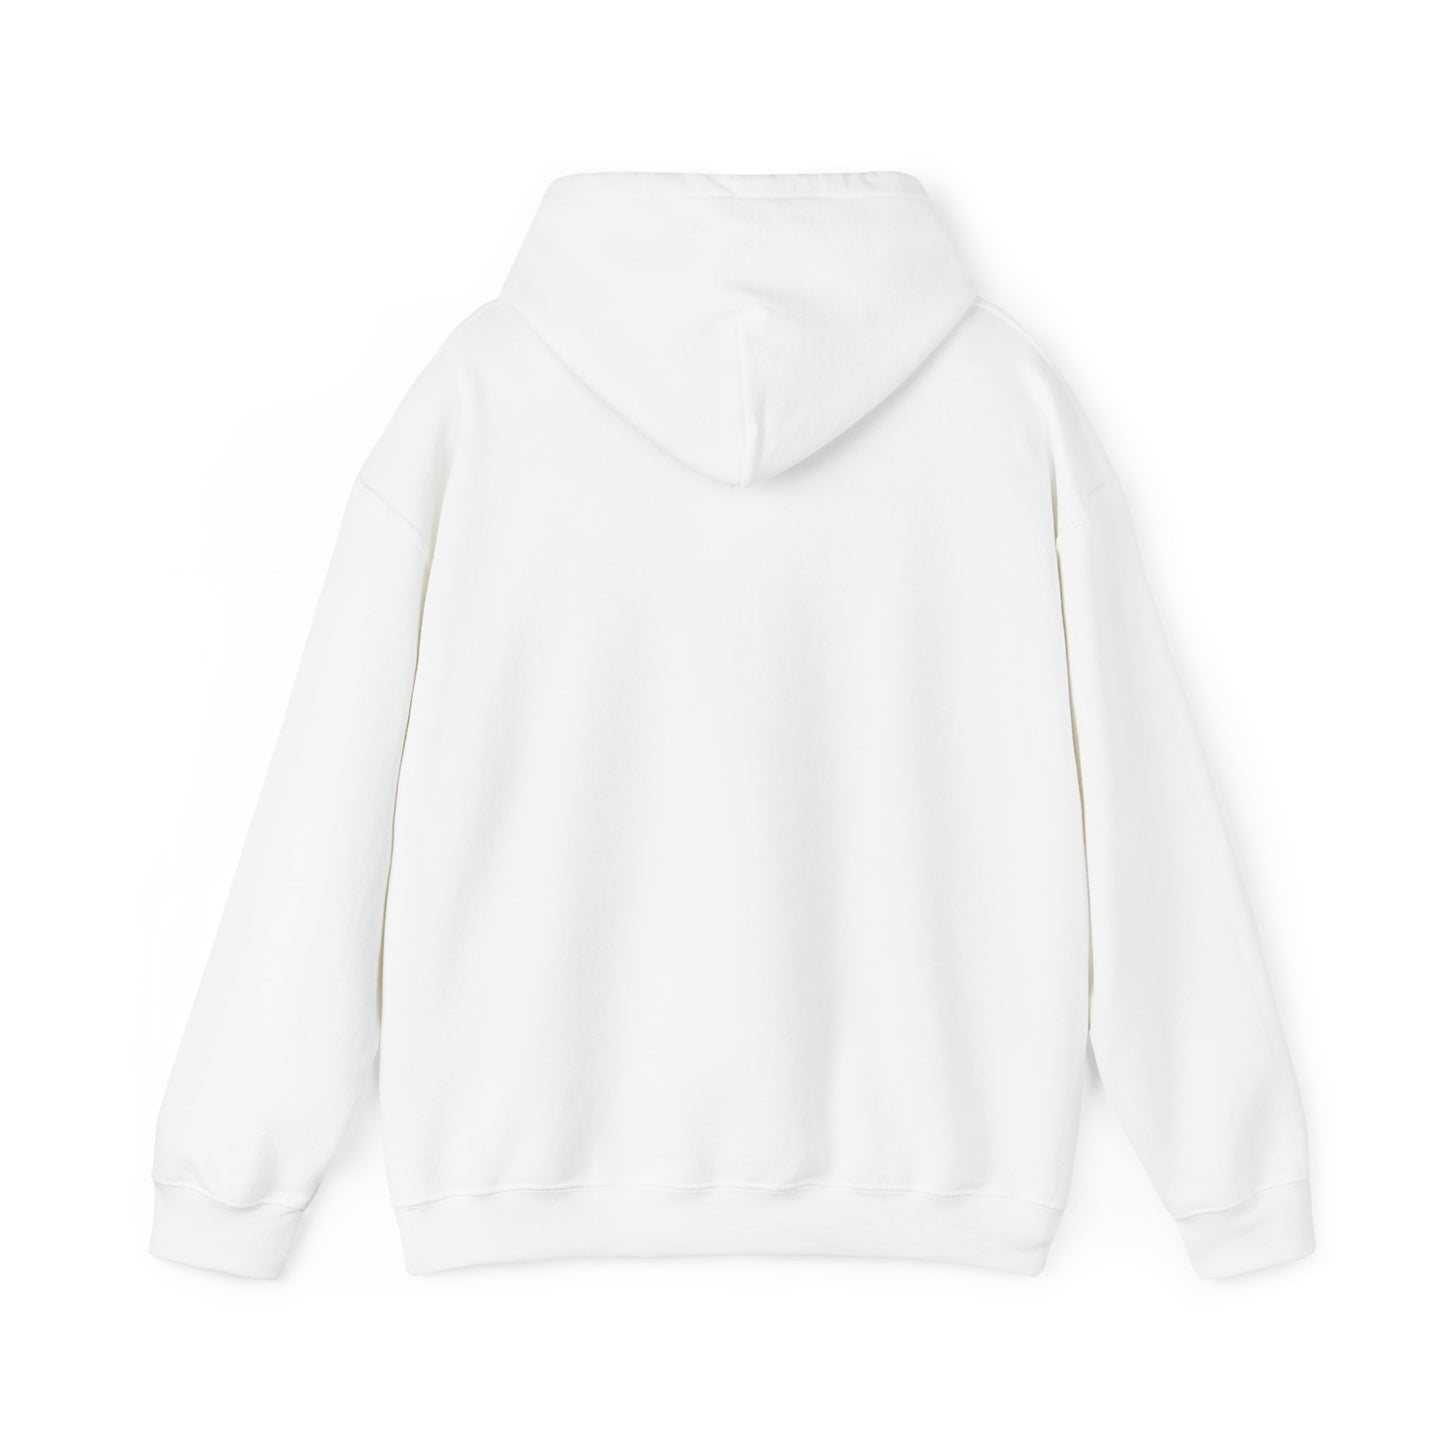 Im A Double D (Dog Dad) Unisex Heavy Blend™ Hooded Sweatshirt